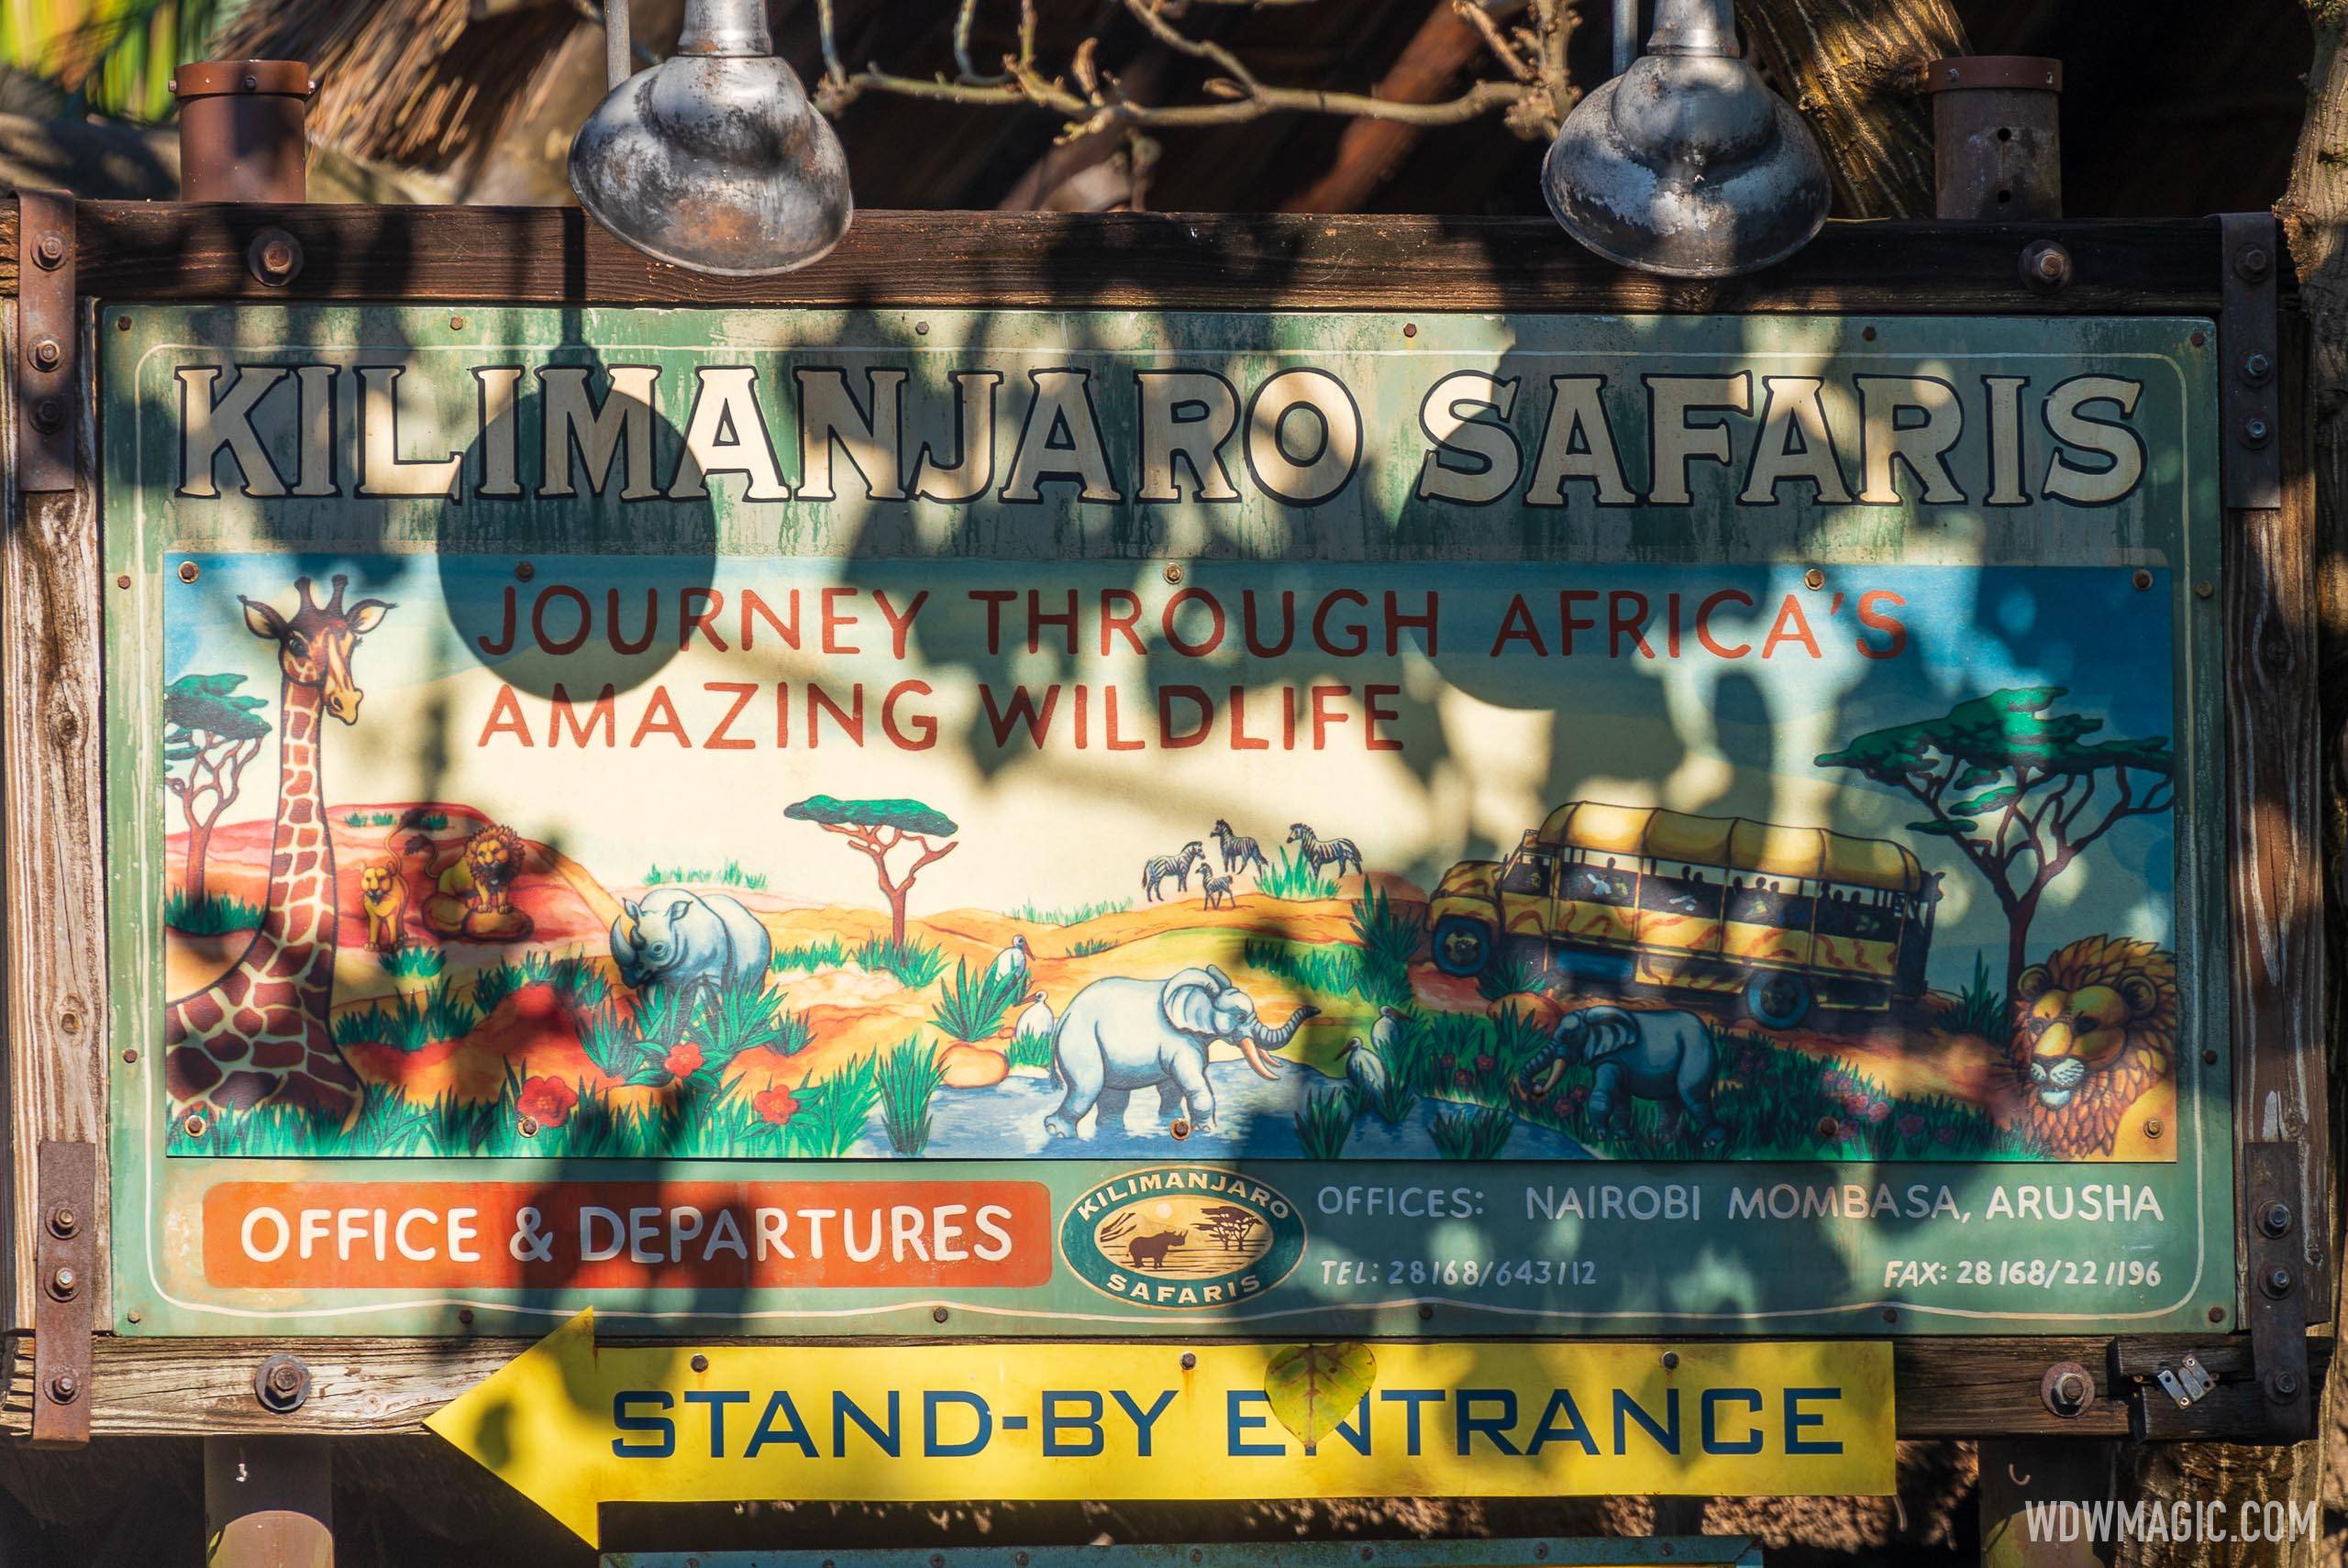 Kilimanjaro Safaris signage